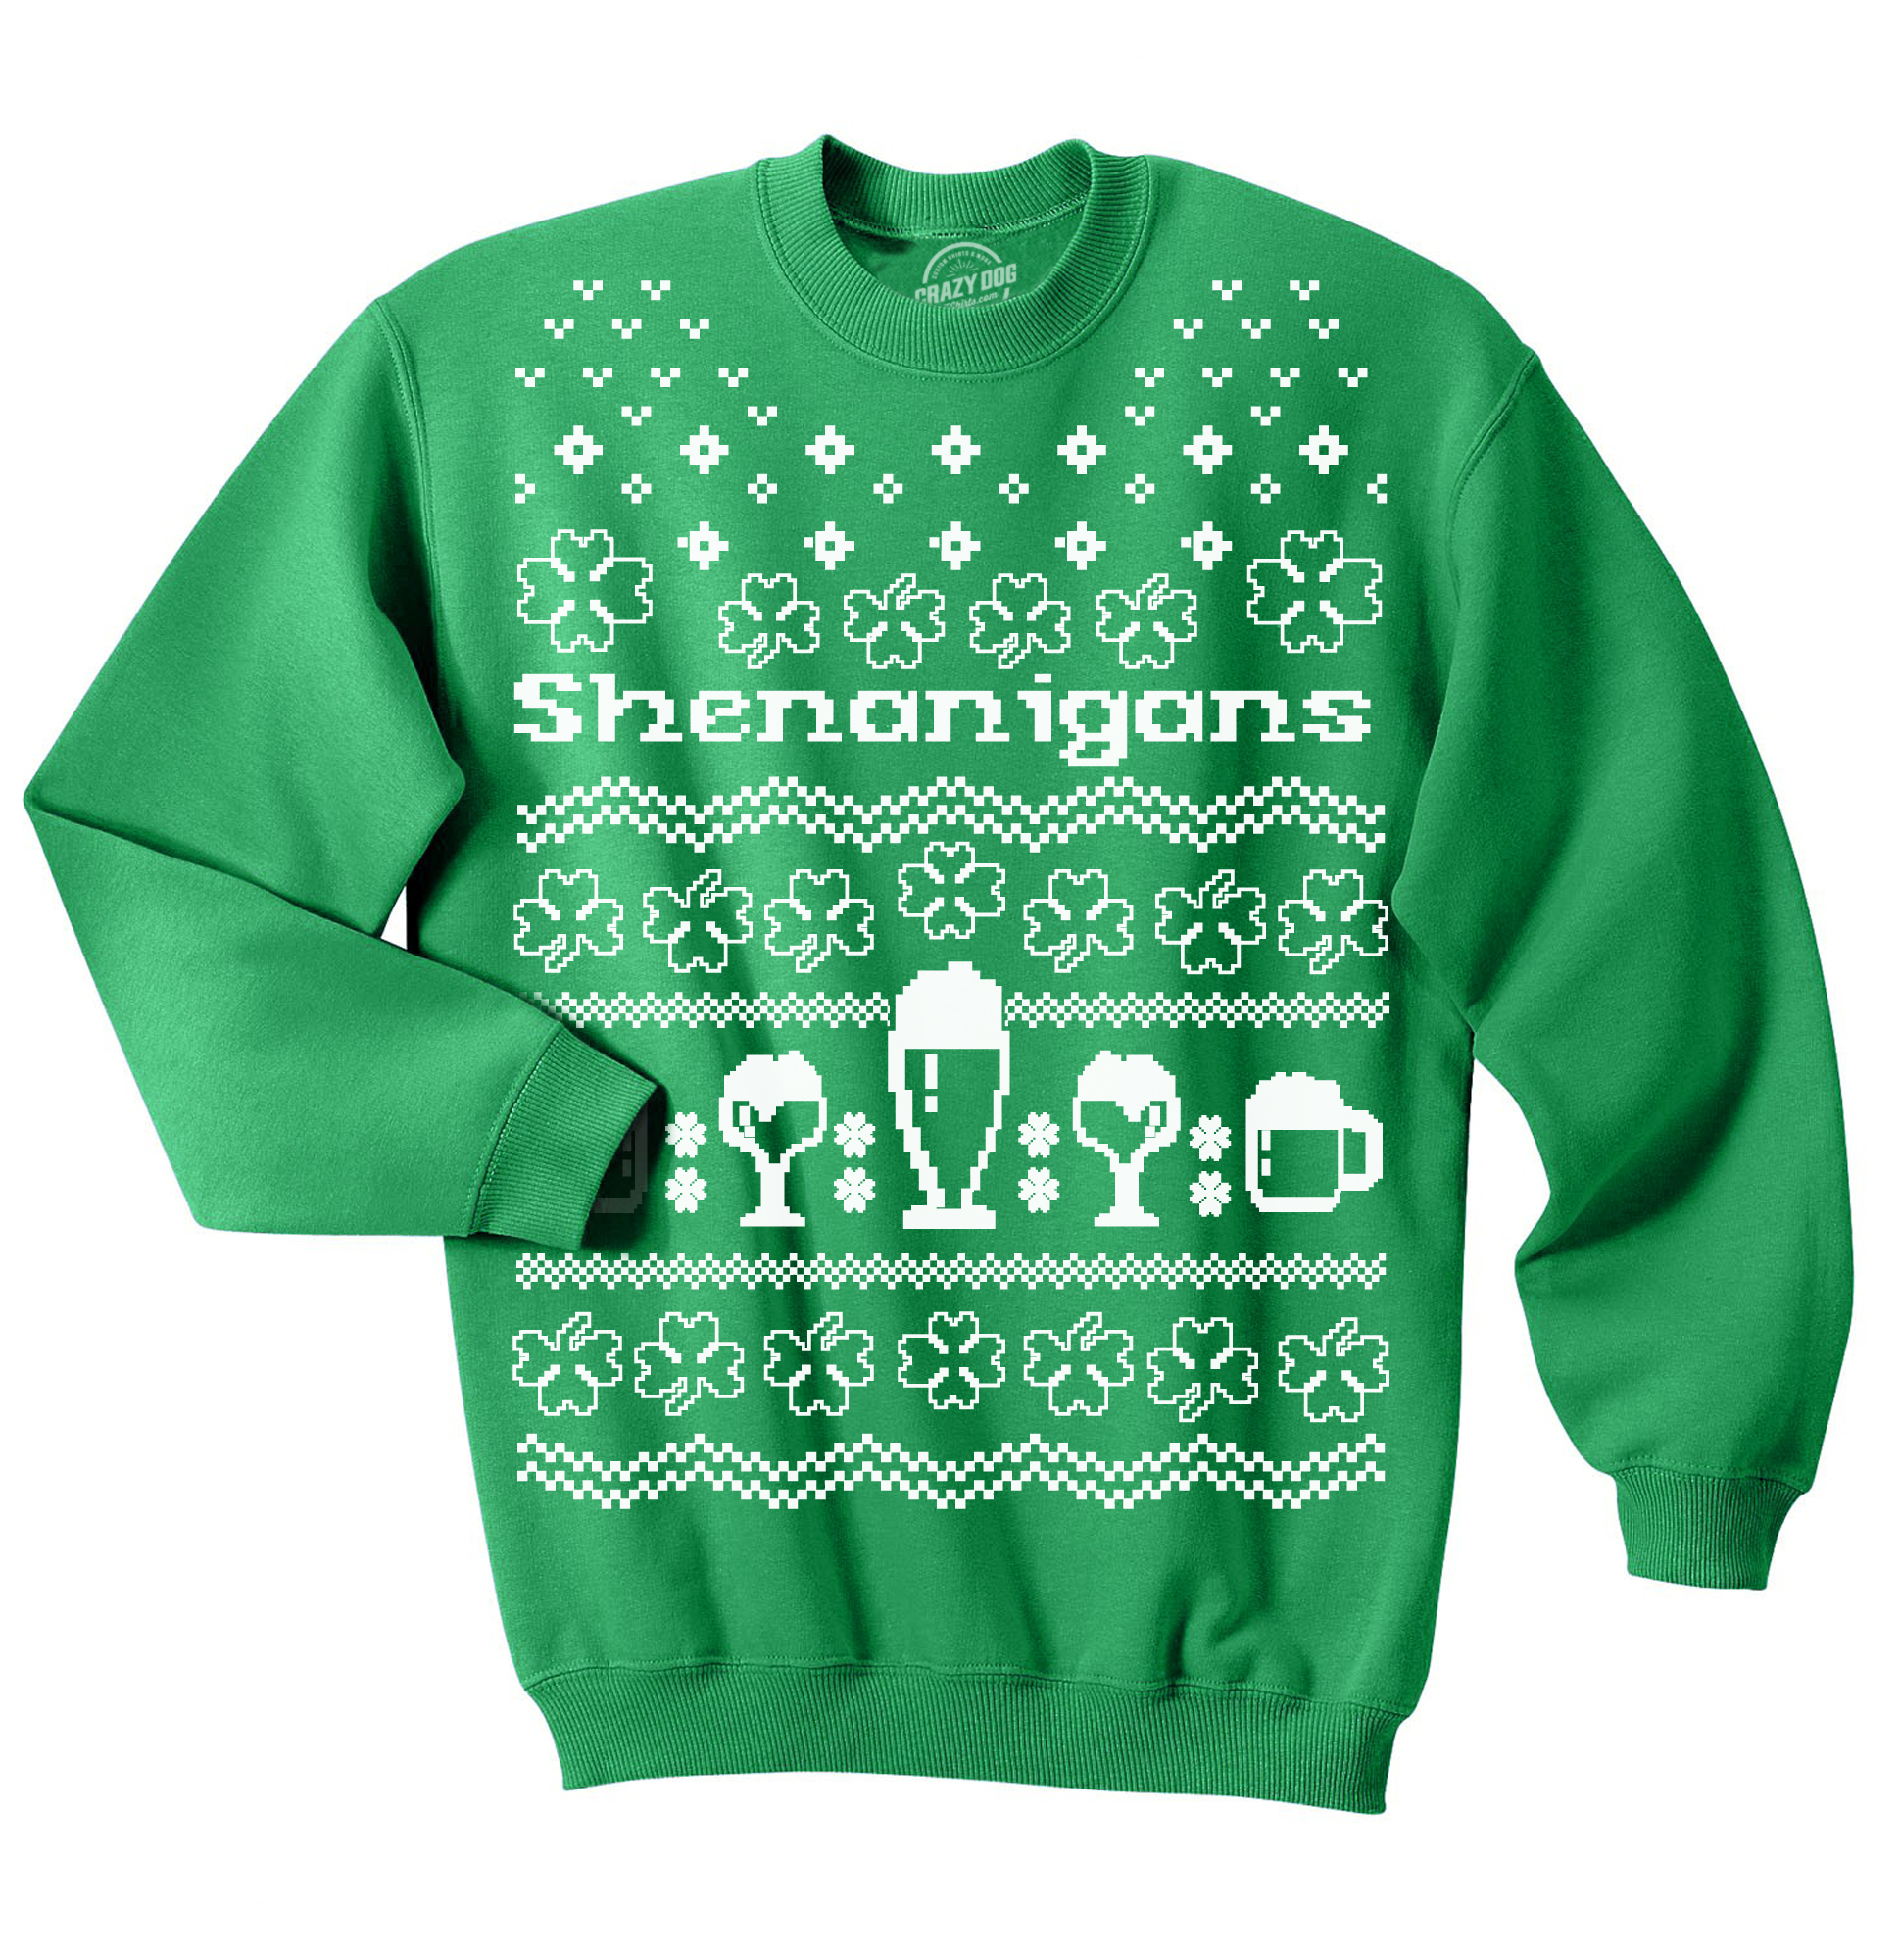 Crazy Dog Tshirts Shenanigans Ugly Christmas Sweatshirt Funny Drinking Cool Irish Clover Shirt